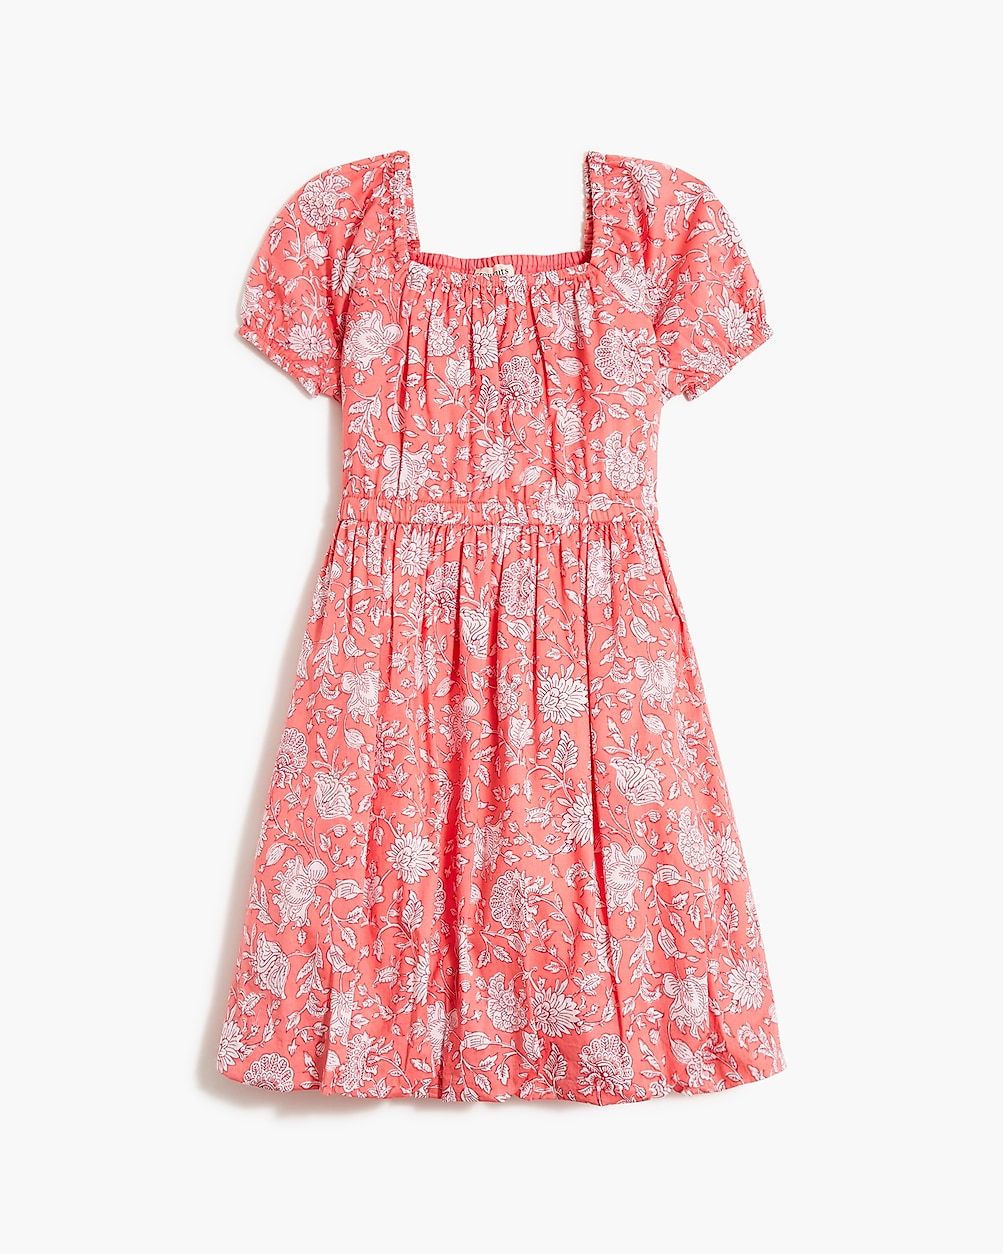 Girls' floral bubble-hem dress | J.Crew Factory